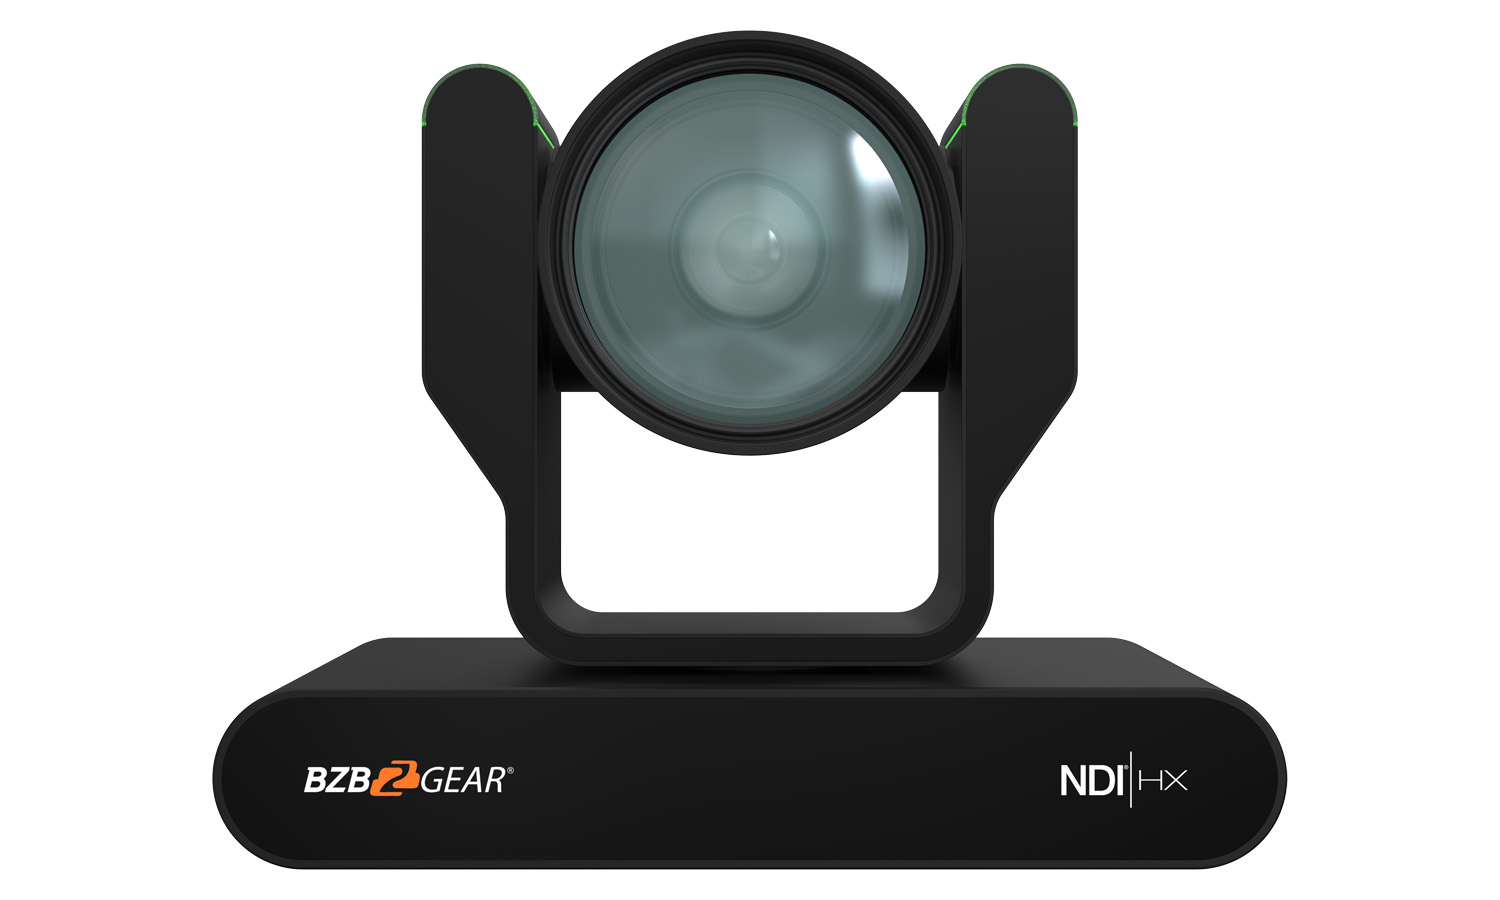 BG-ADAMO-4KND12X-B 12X 4K UHD AUTO TRACKING HDMI 2.0/12G-SDI/USB 2.0/USB 3.0/POE/NDI|HX3 Live Streaming PTZ Camera with Tally Lights (Black) by BZBGEAR